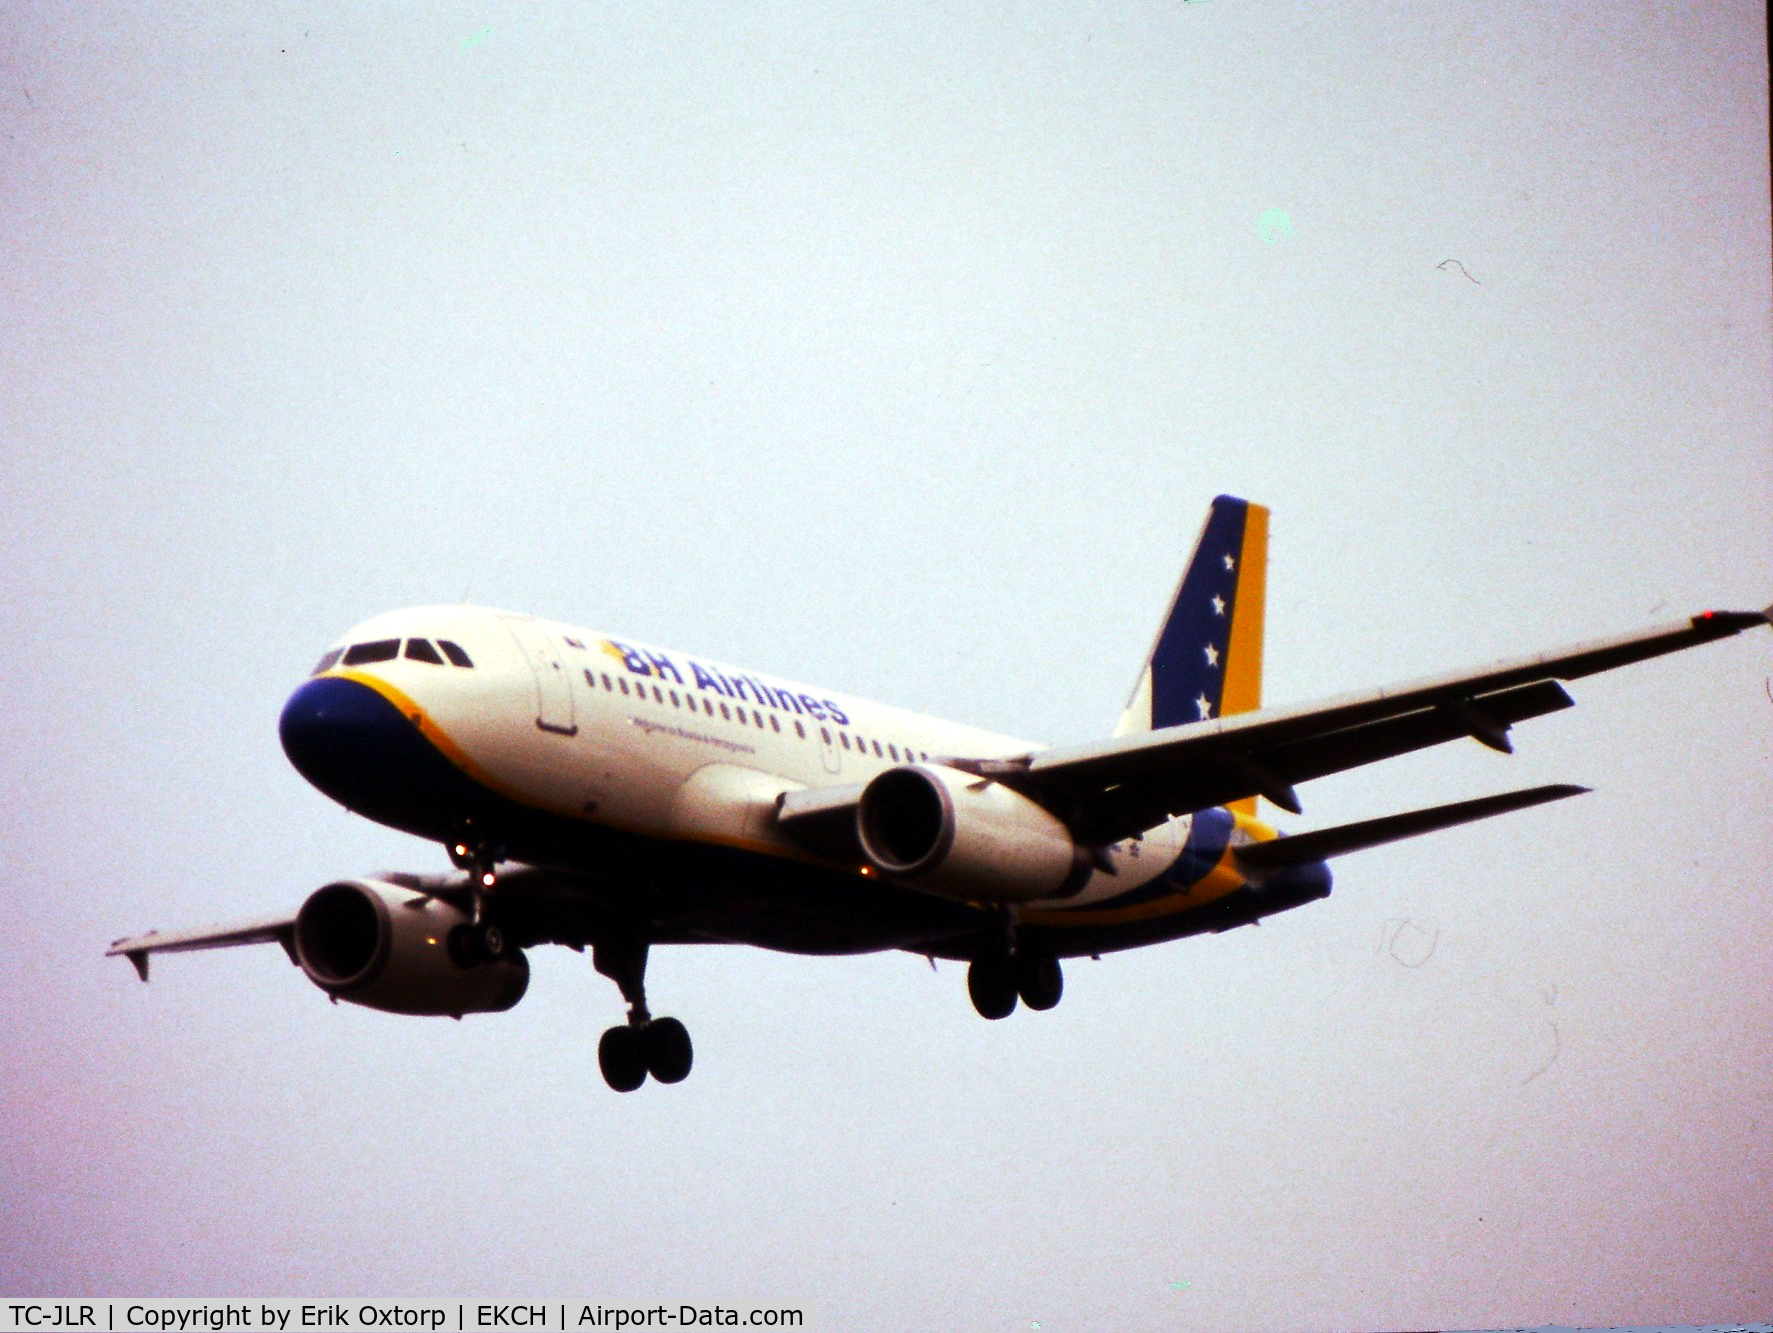 TC-JLR, 2007 Airbus A319-132 C/N 3142, TC-JLR Landing rw 22L
Scanned slide